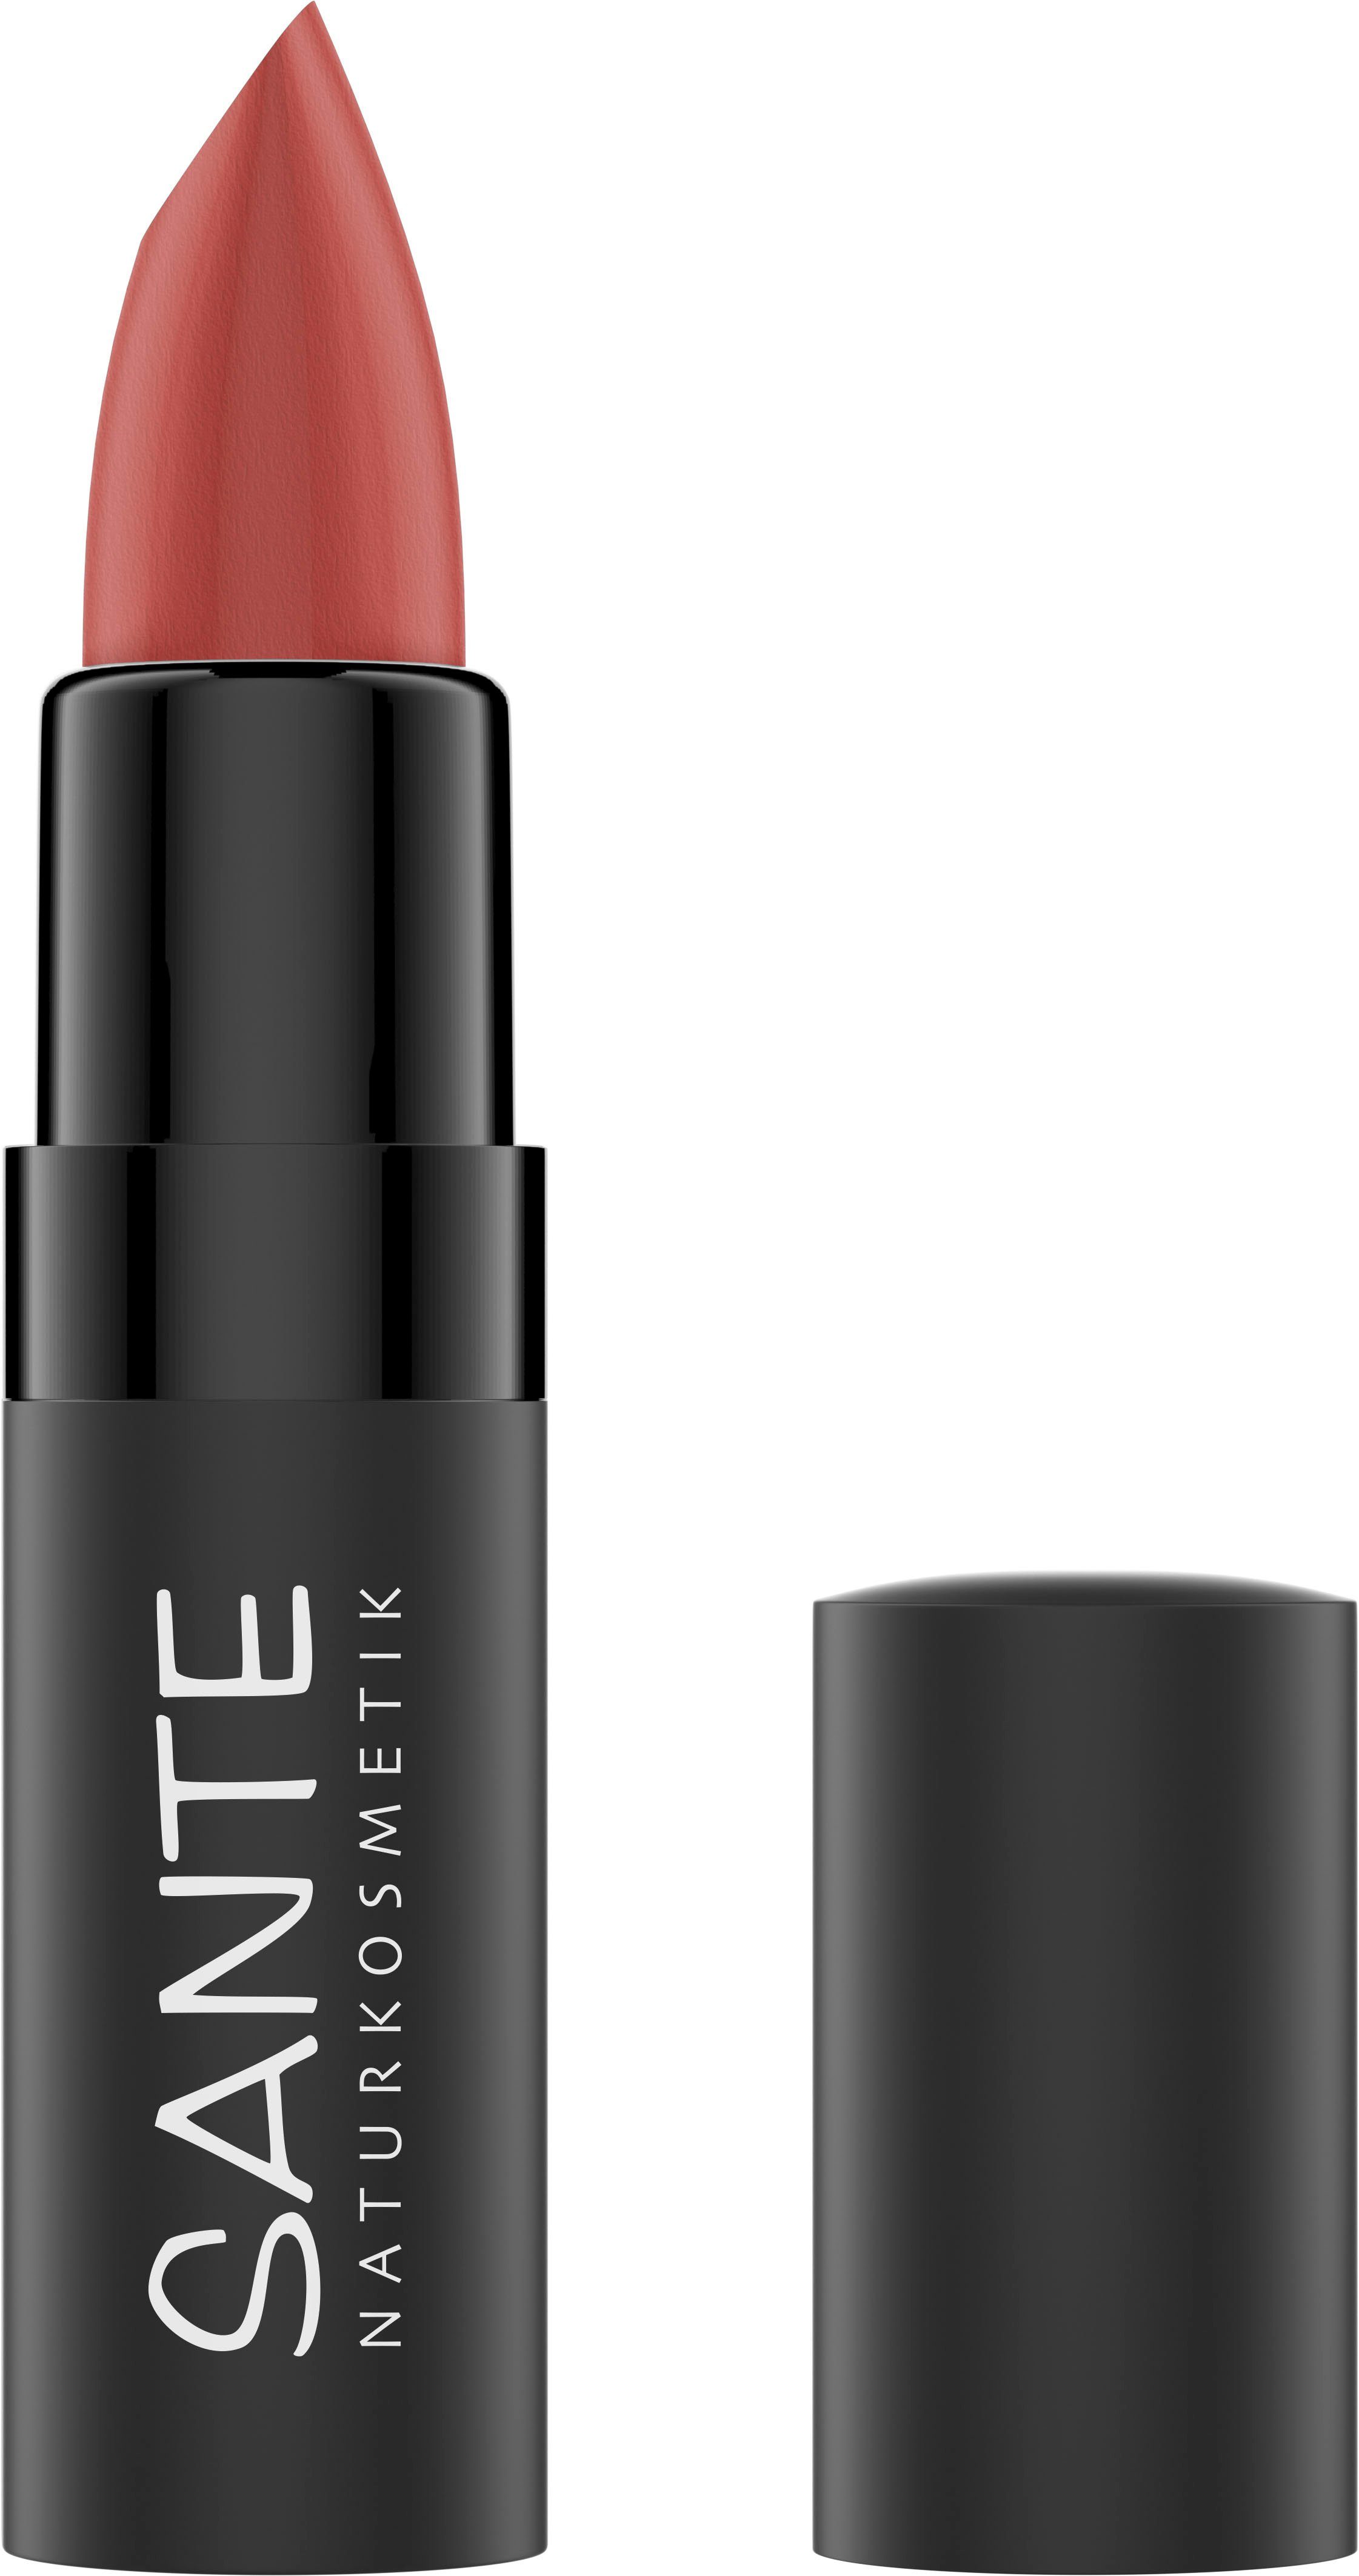 Weltweit sehr beliebt SANTE Lippenstift Sante Blissful 03 Lipstick Matte Terra